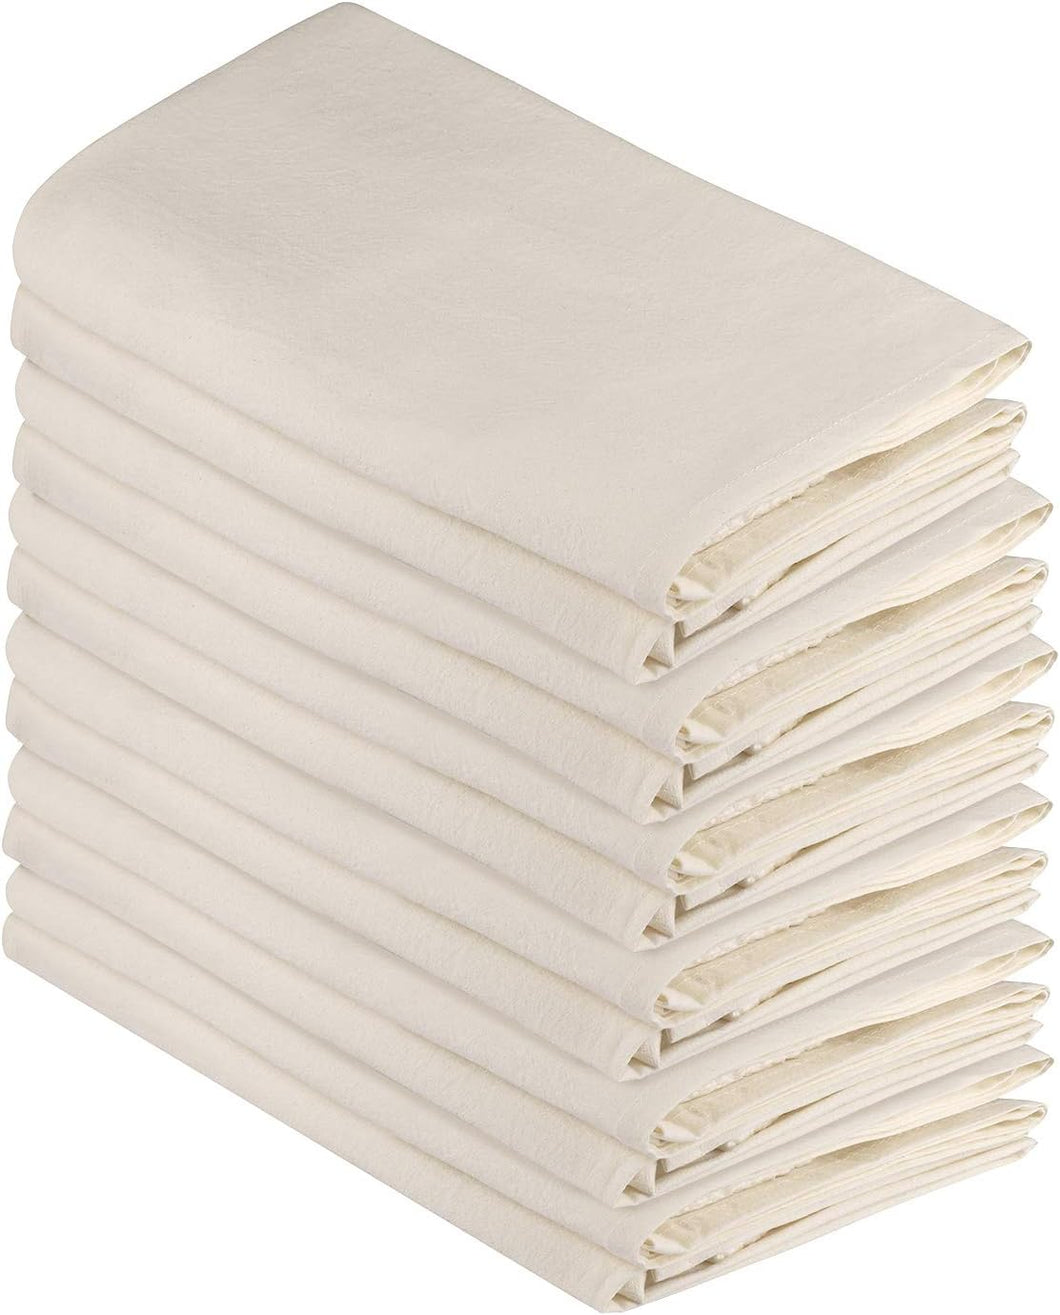 Copy of Flour Sack Dish Towels- 100% Cotton-Size 12x12 inches